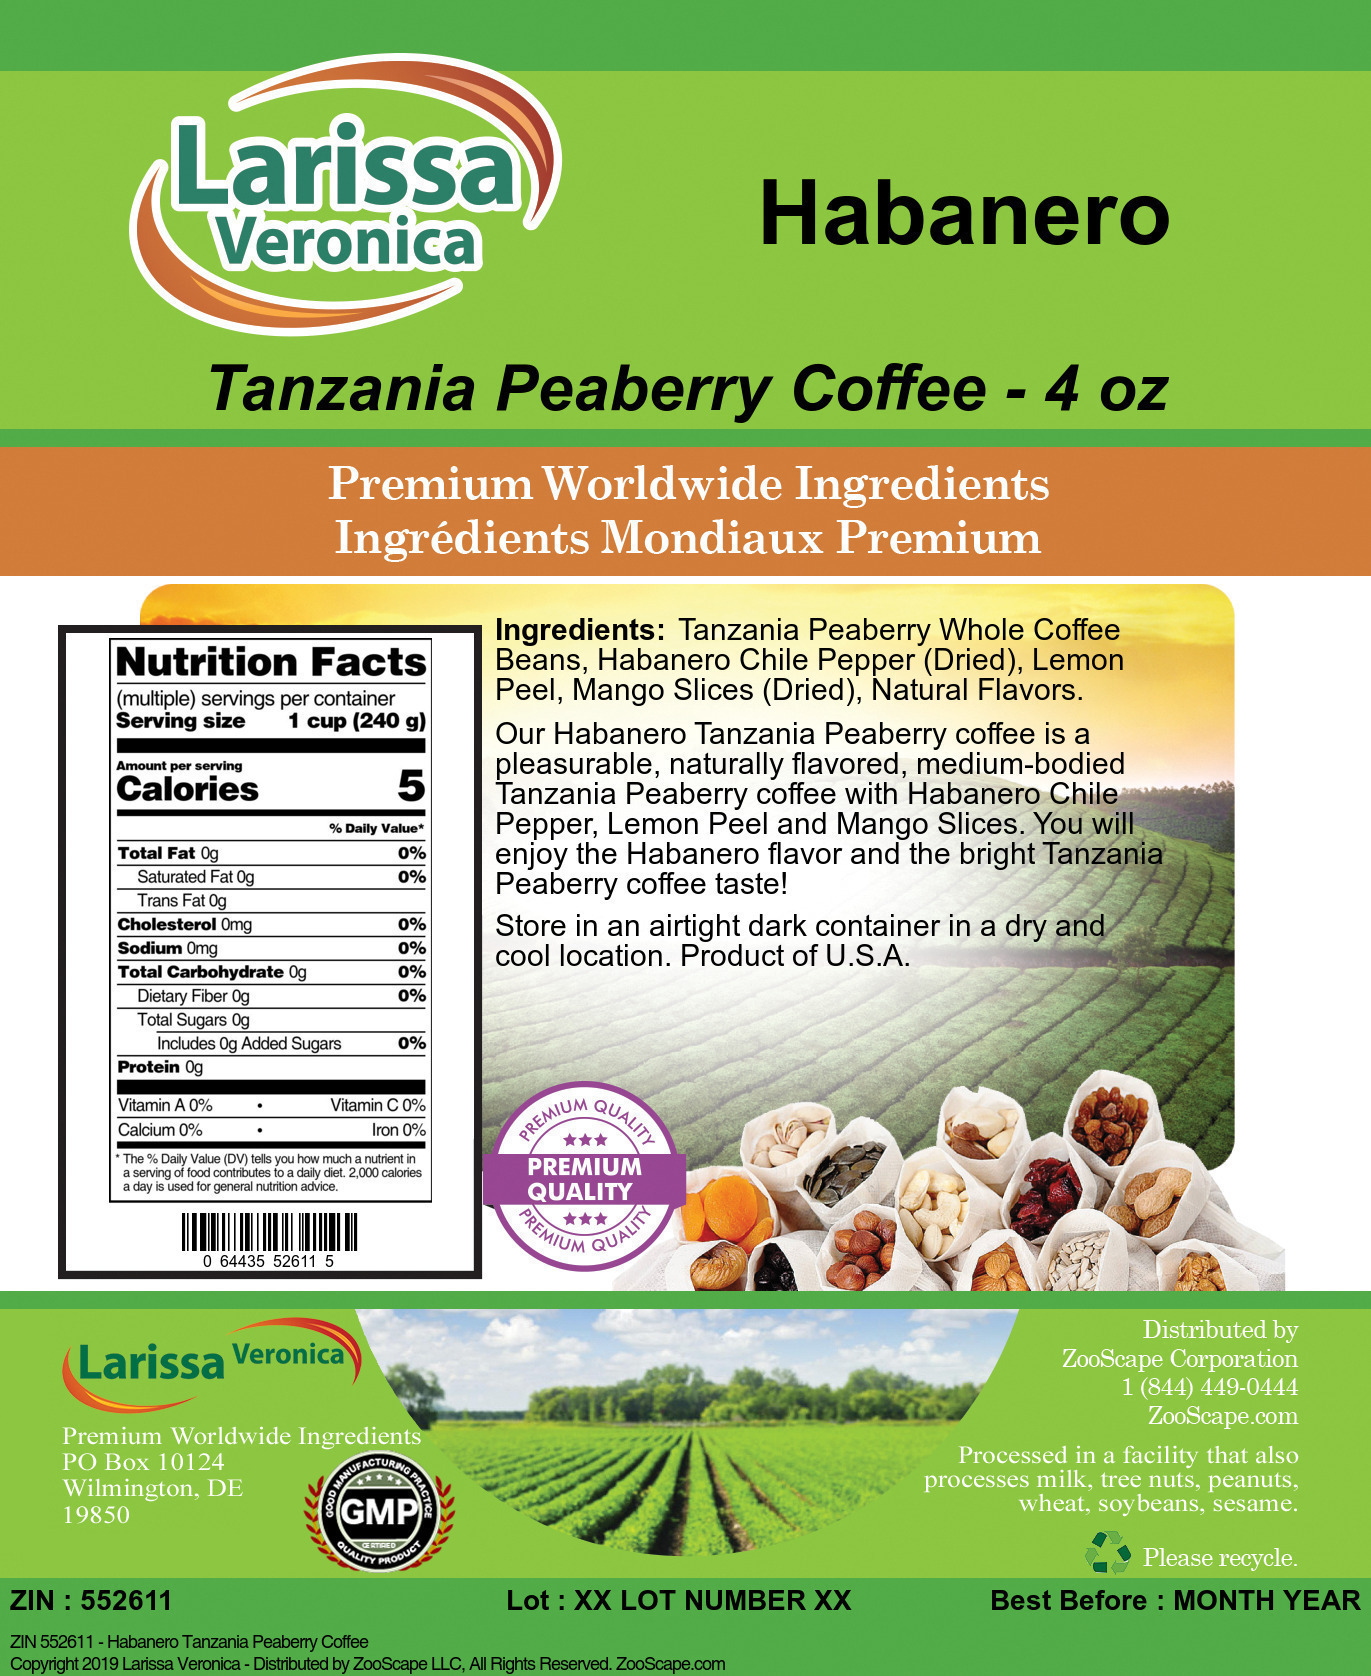 Habanero Tanzania Peaberry Coffee - Label